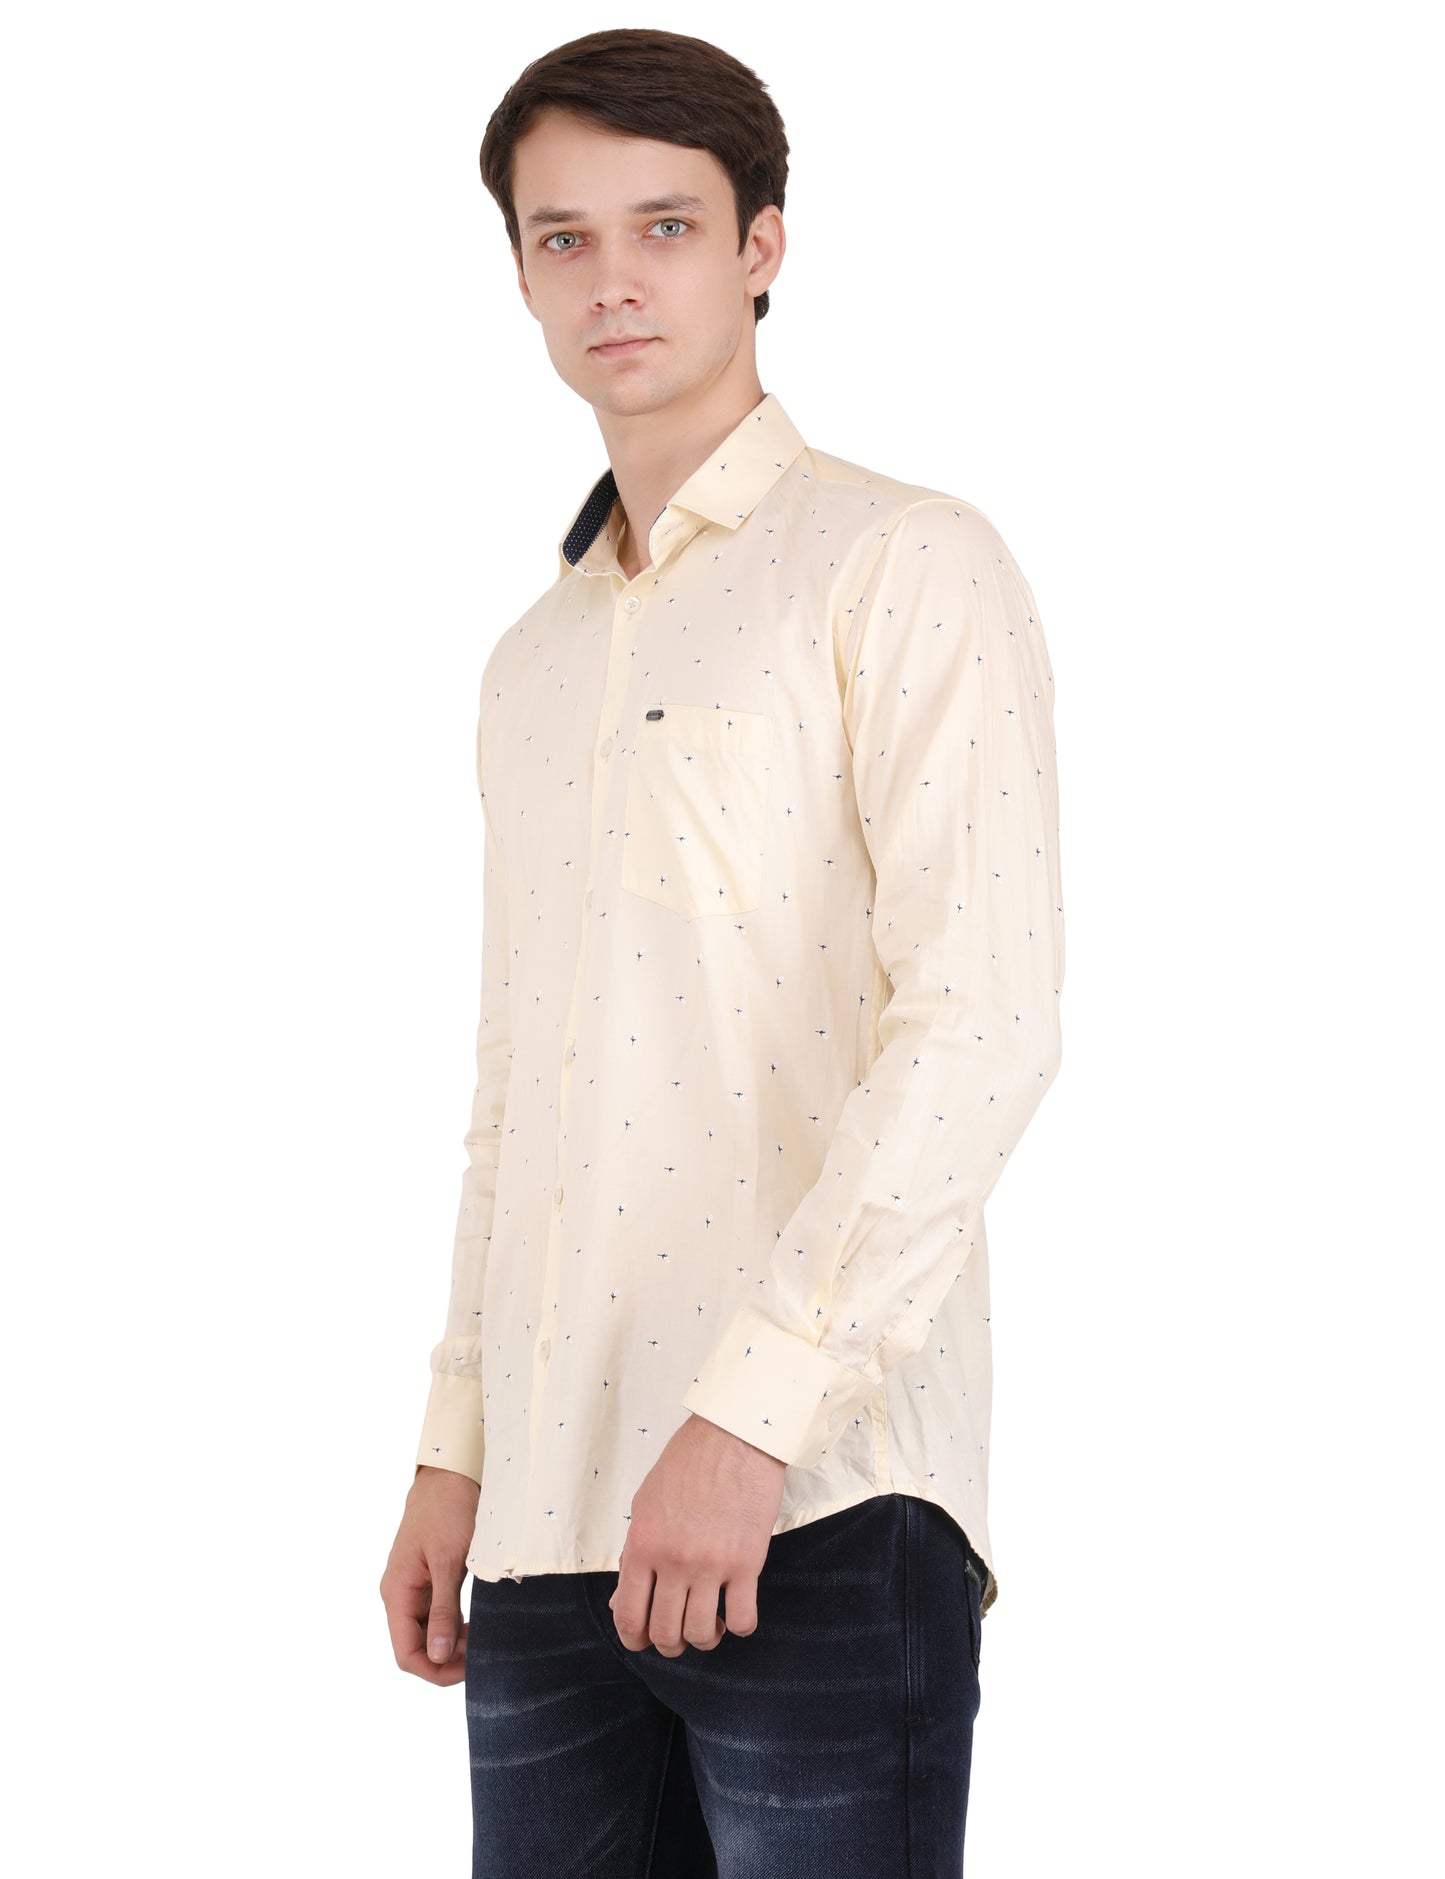 Minimal Leaf Print Yellow Shirt - Stylish Men's Fashion | Shop Now